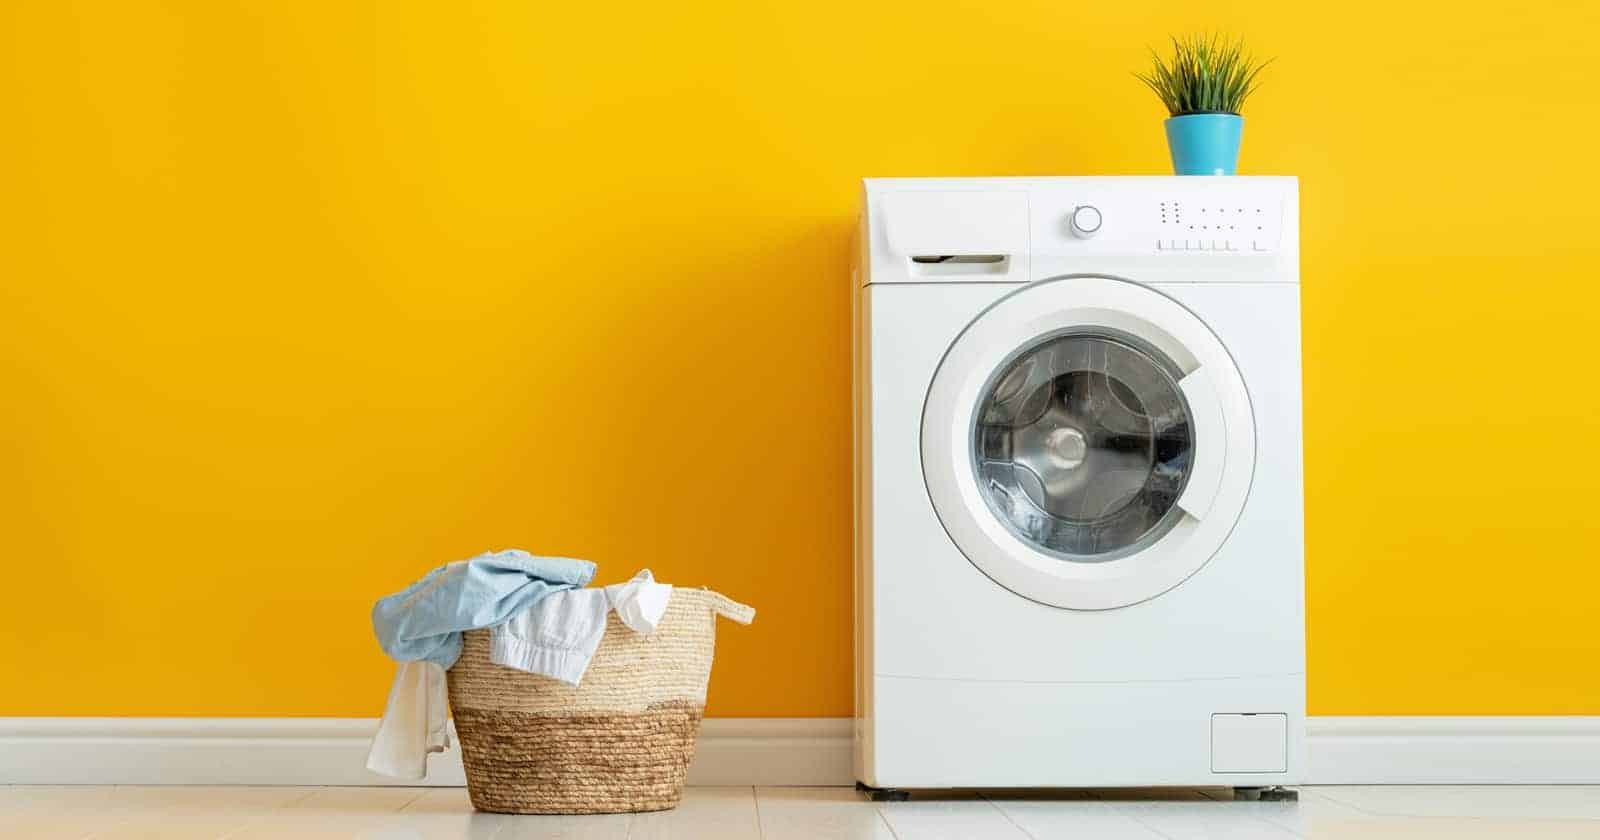 who invented washing machine